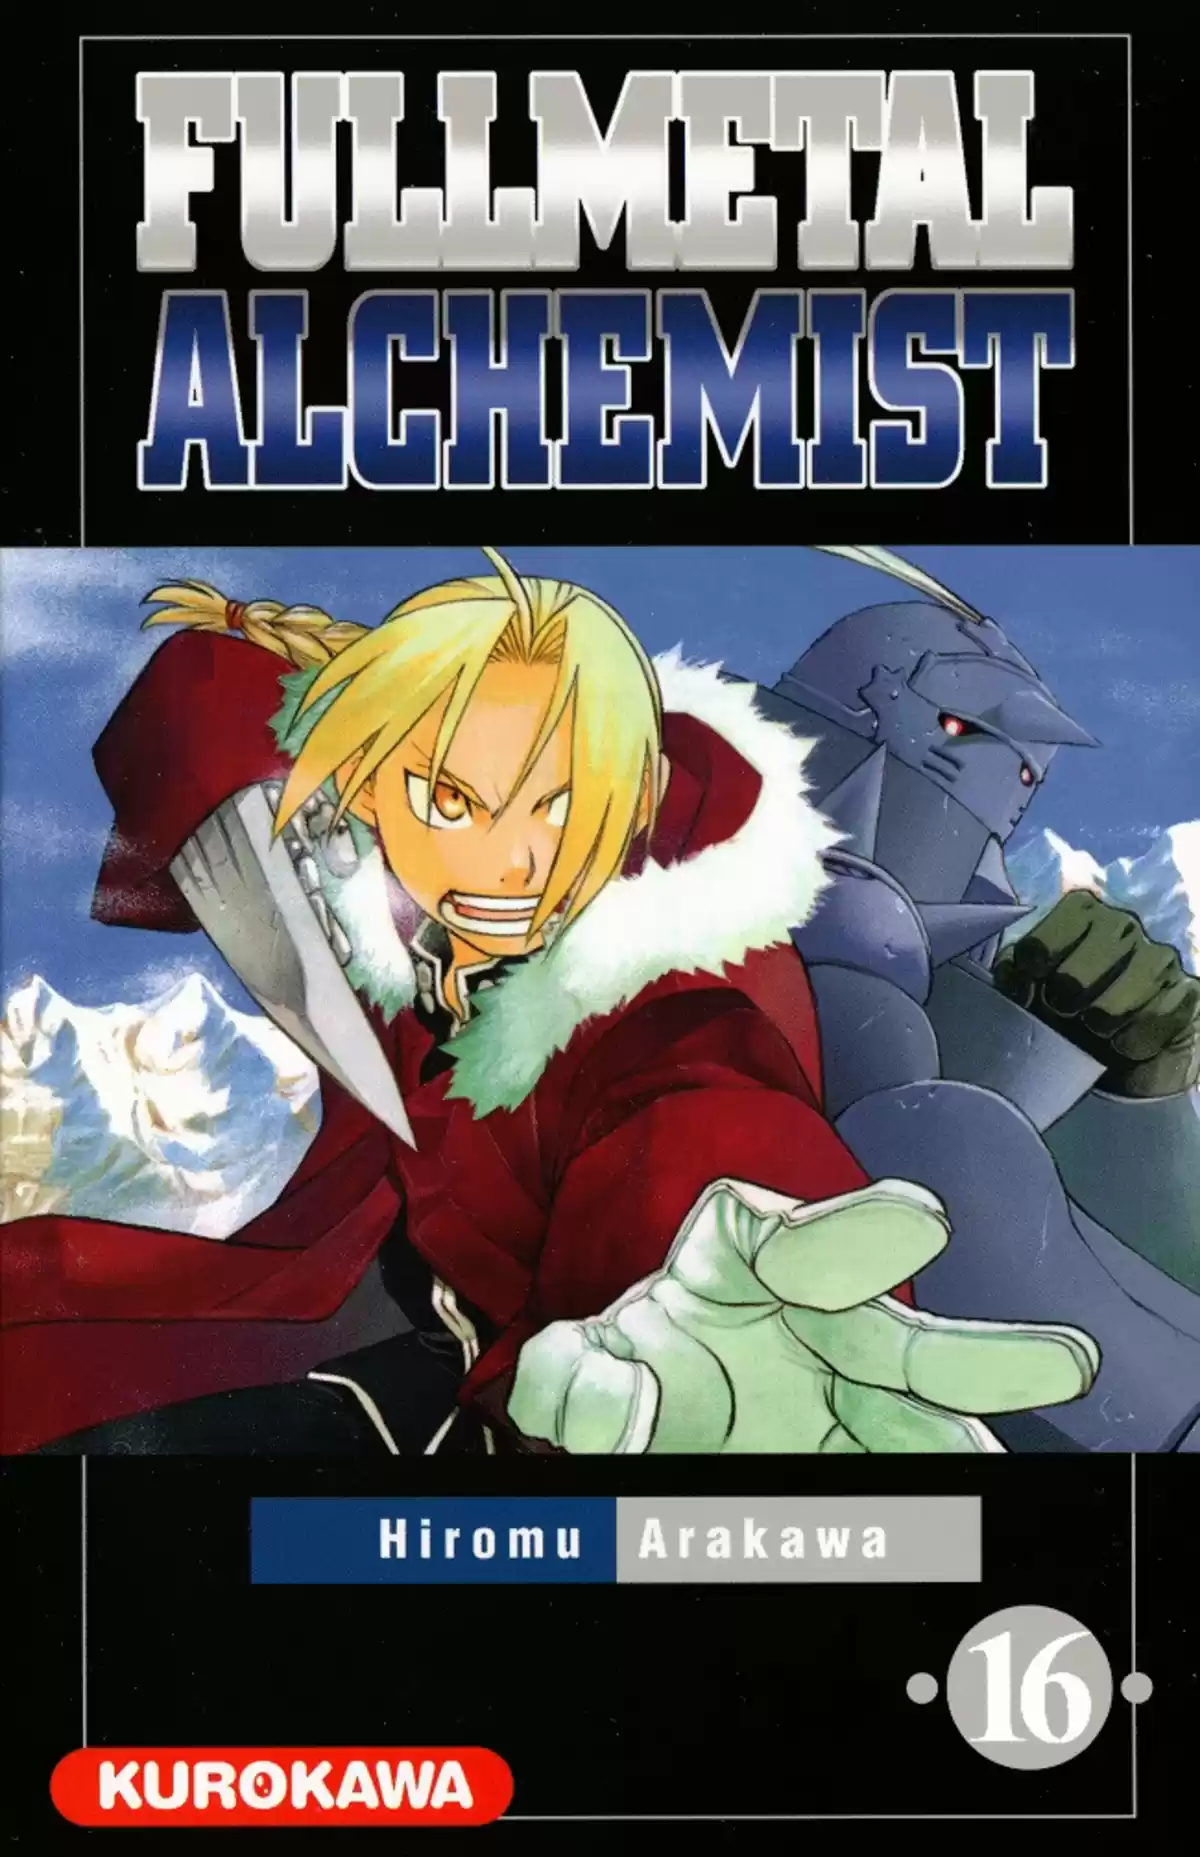 Fullmetal Alchemist Volume 16 page 1